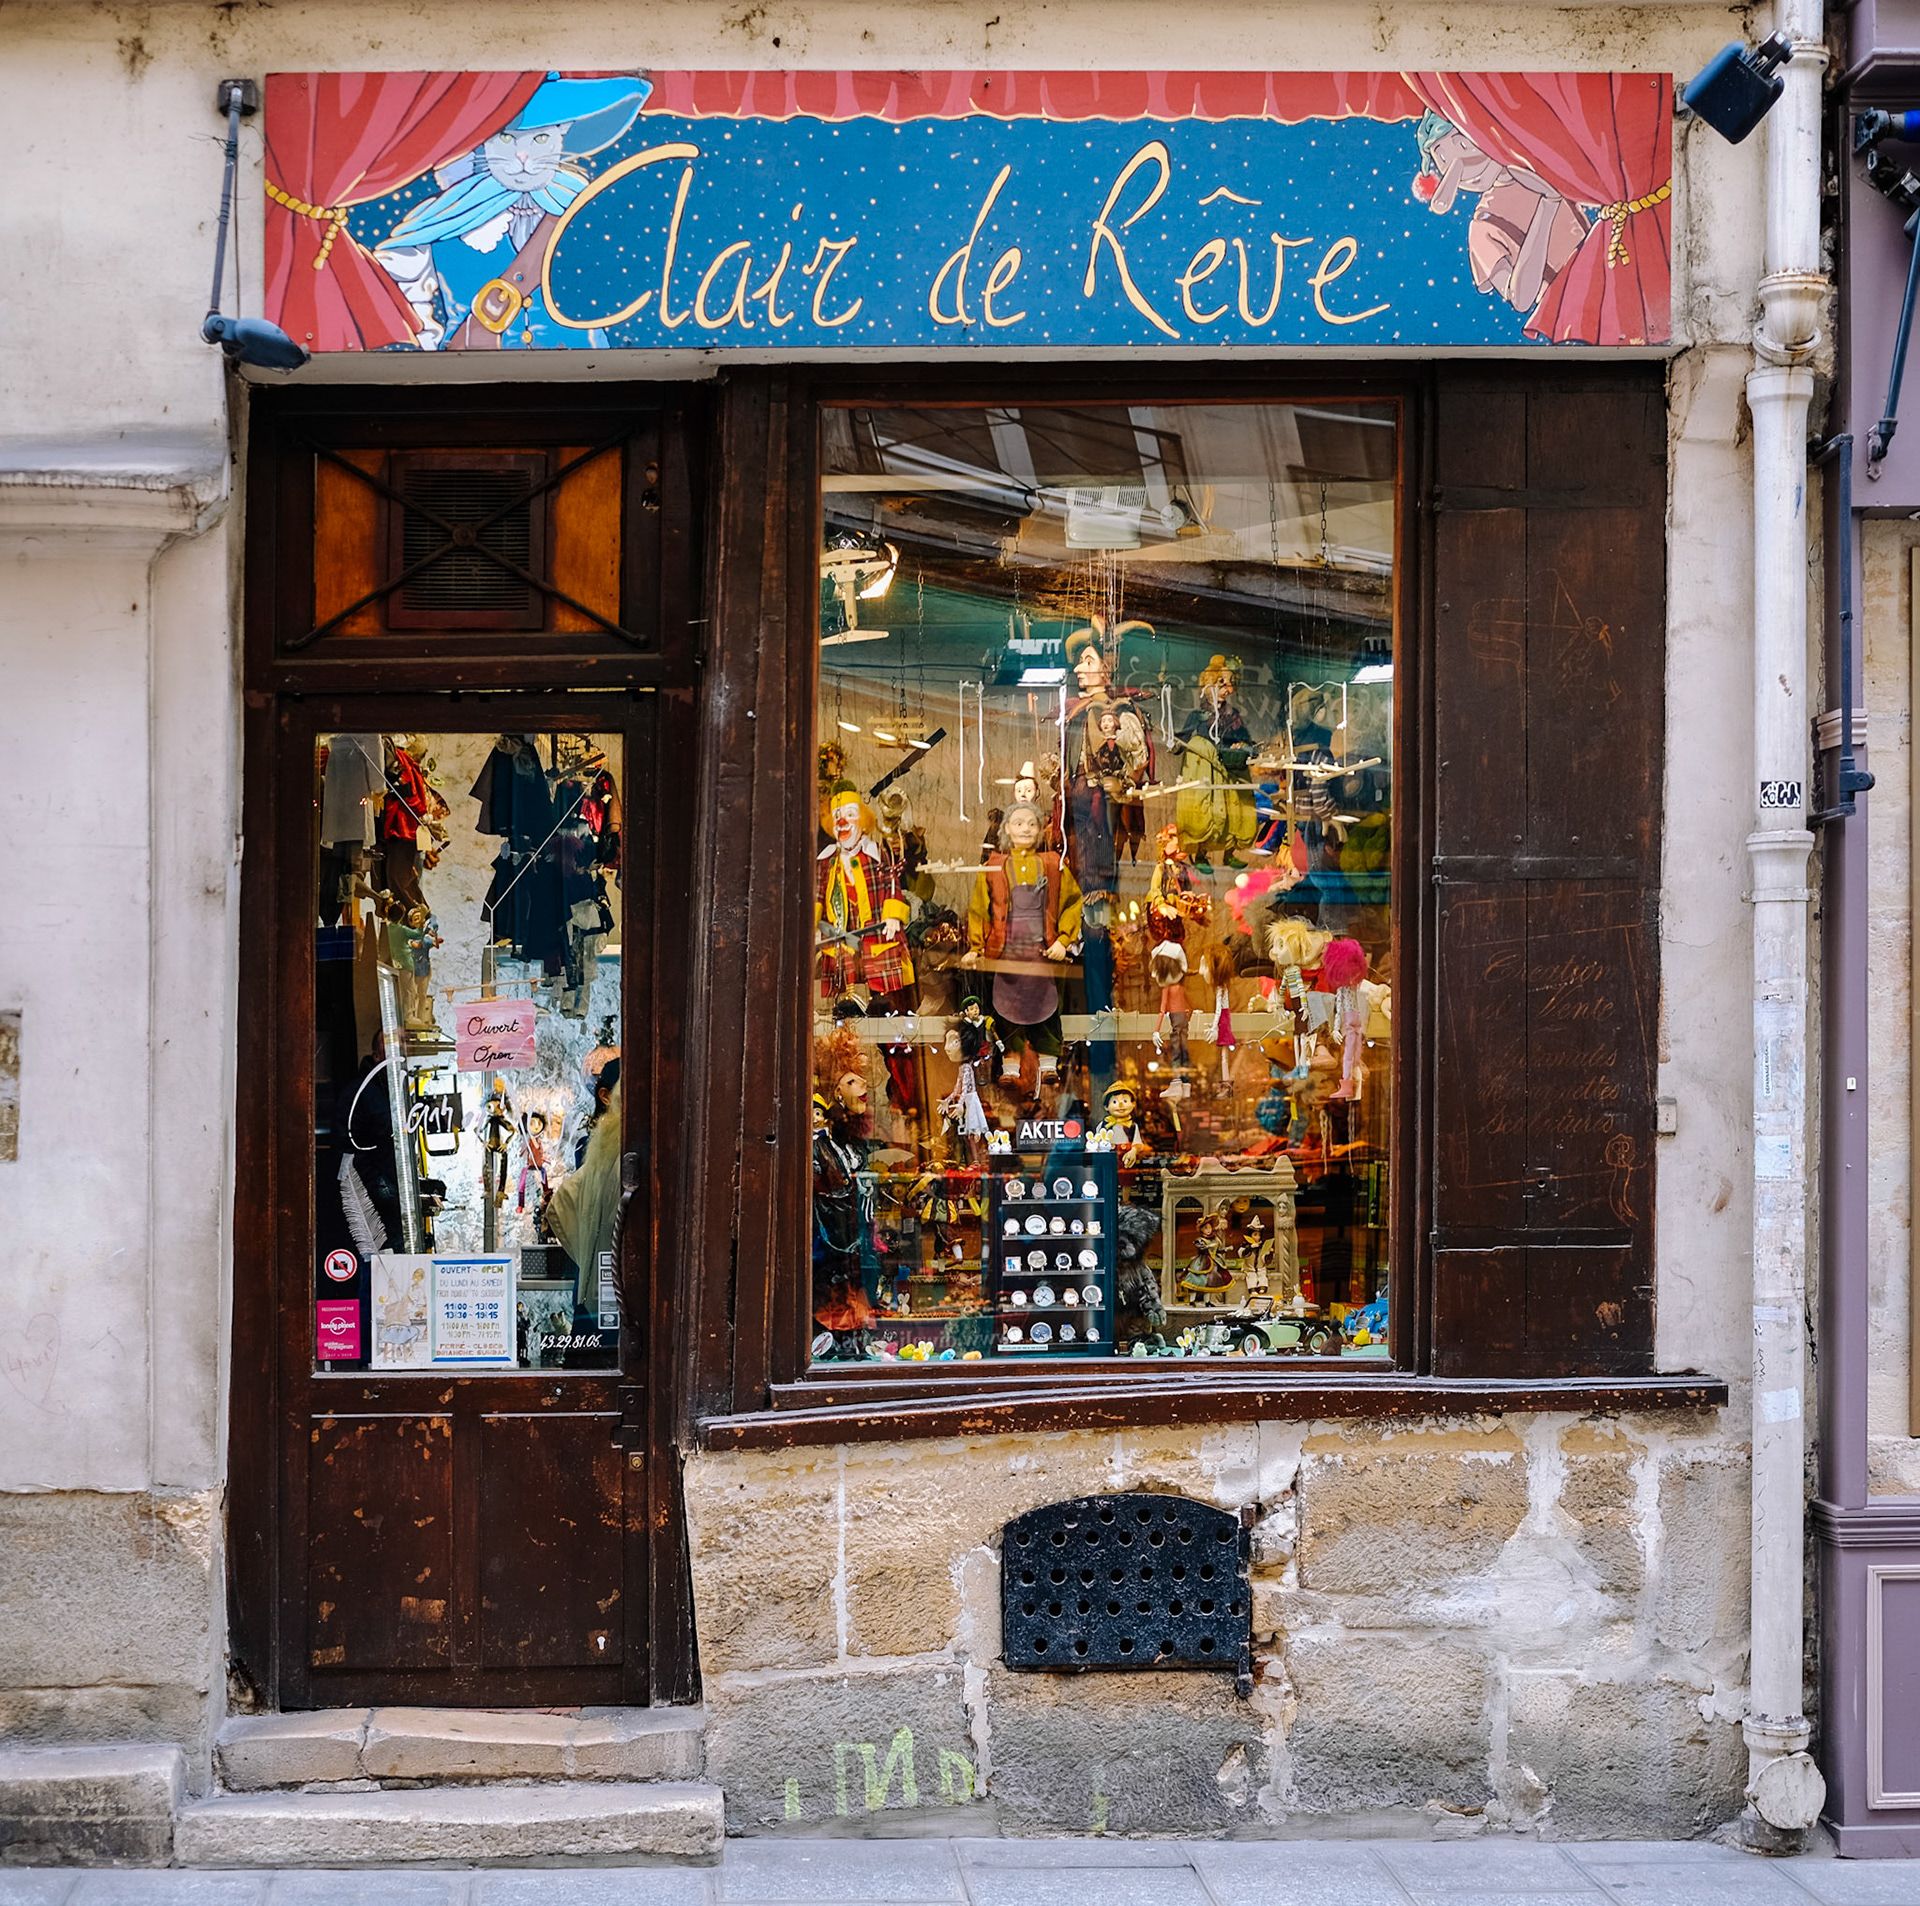 Clair de Reve storefront in Paris